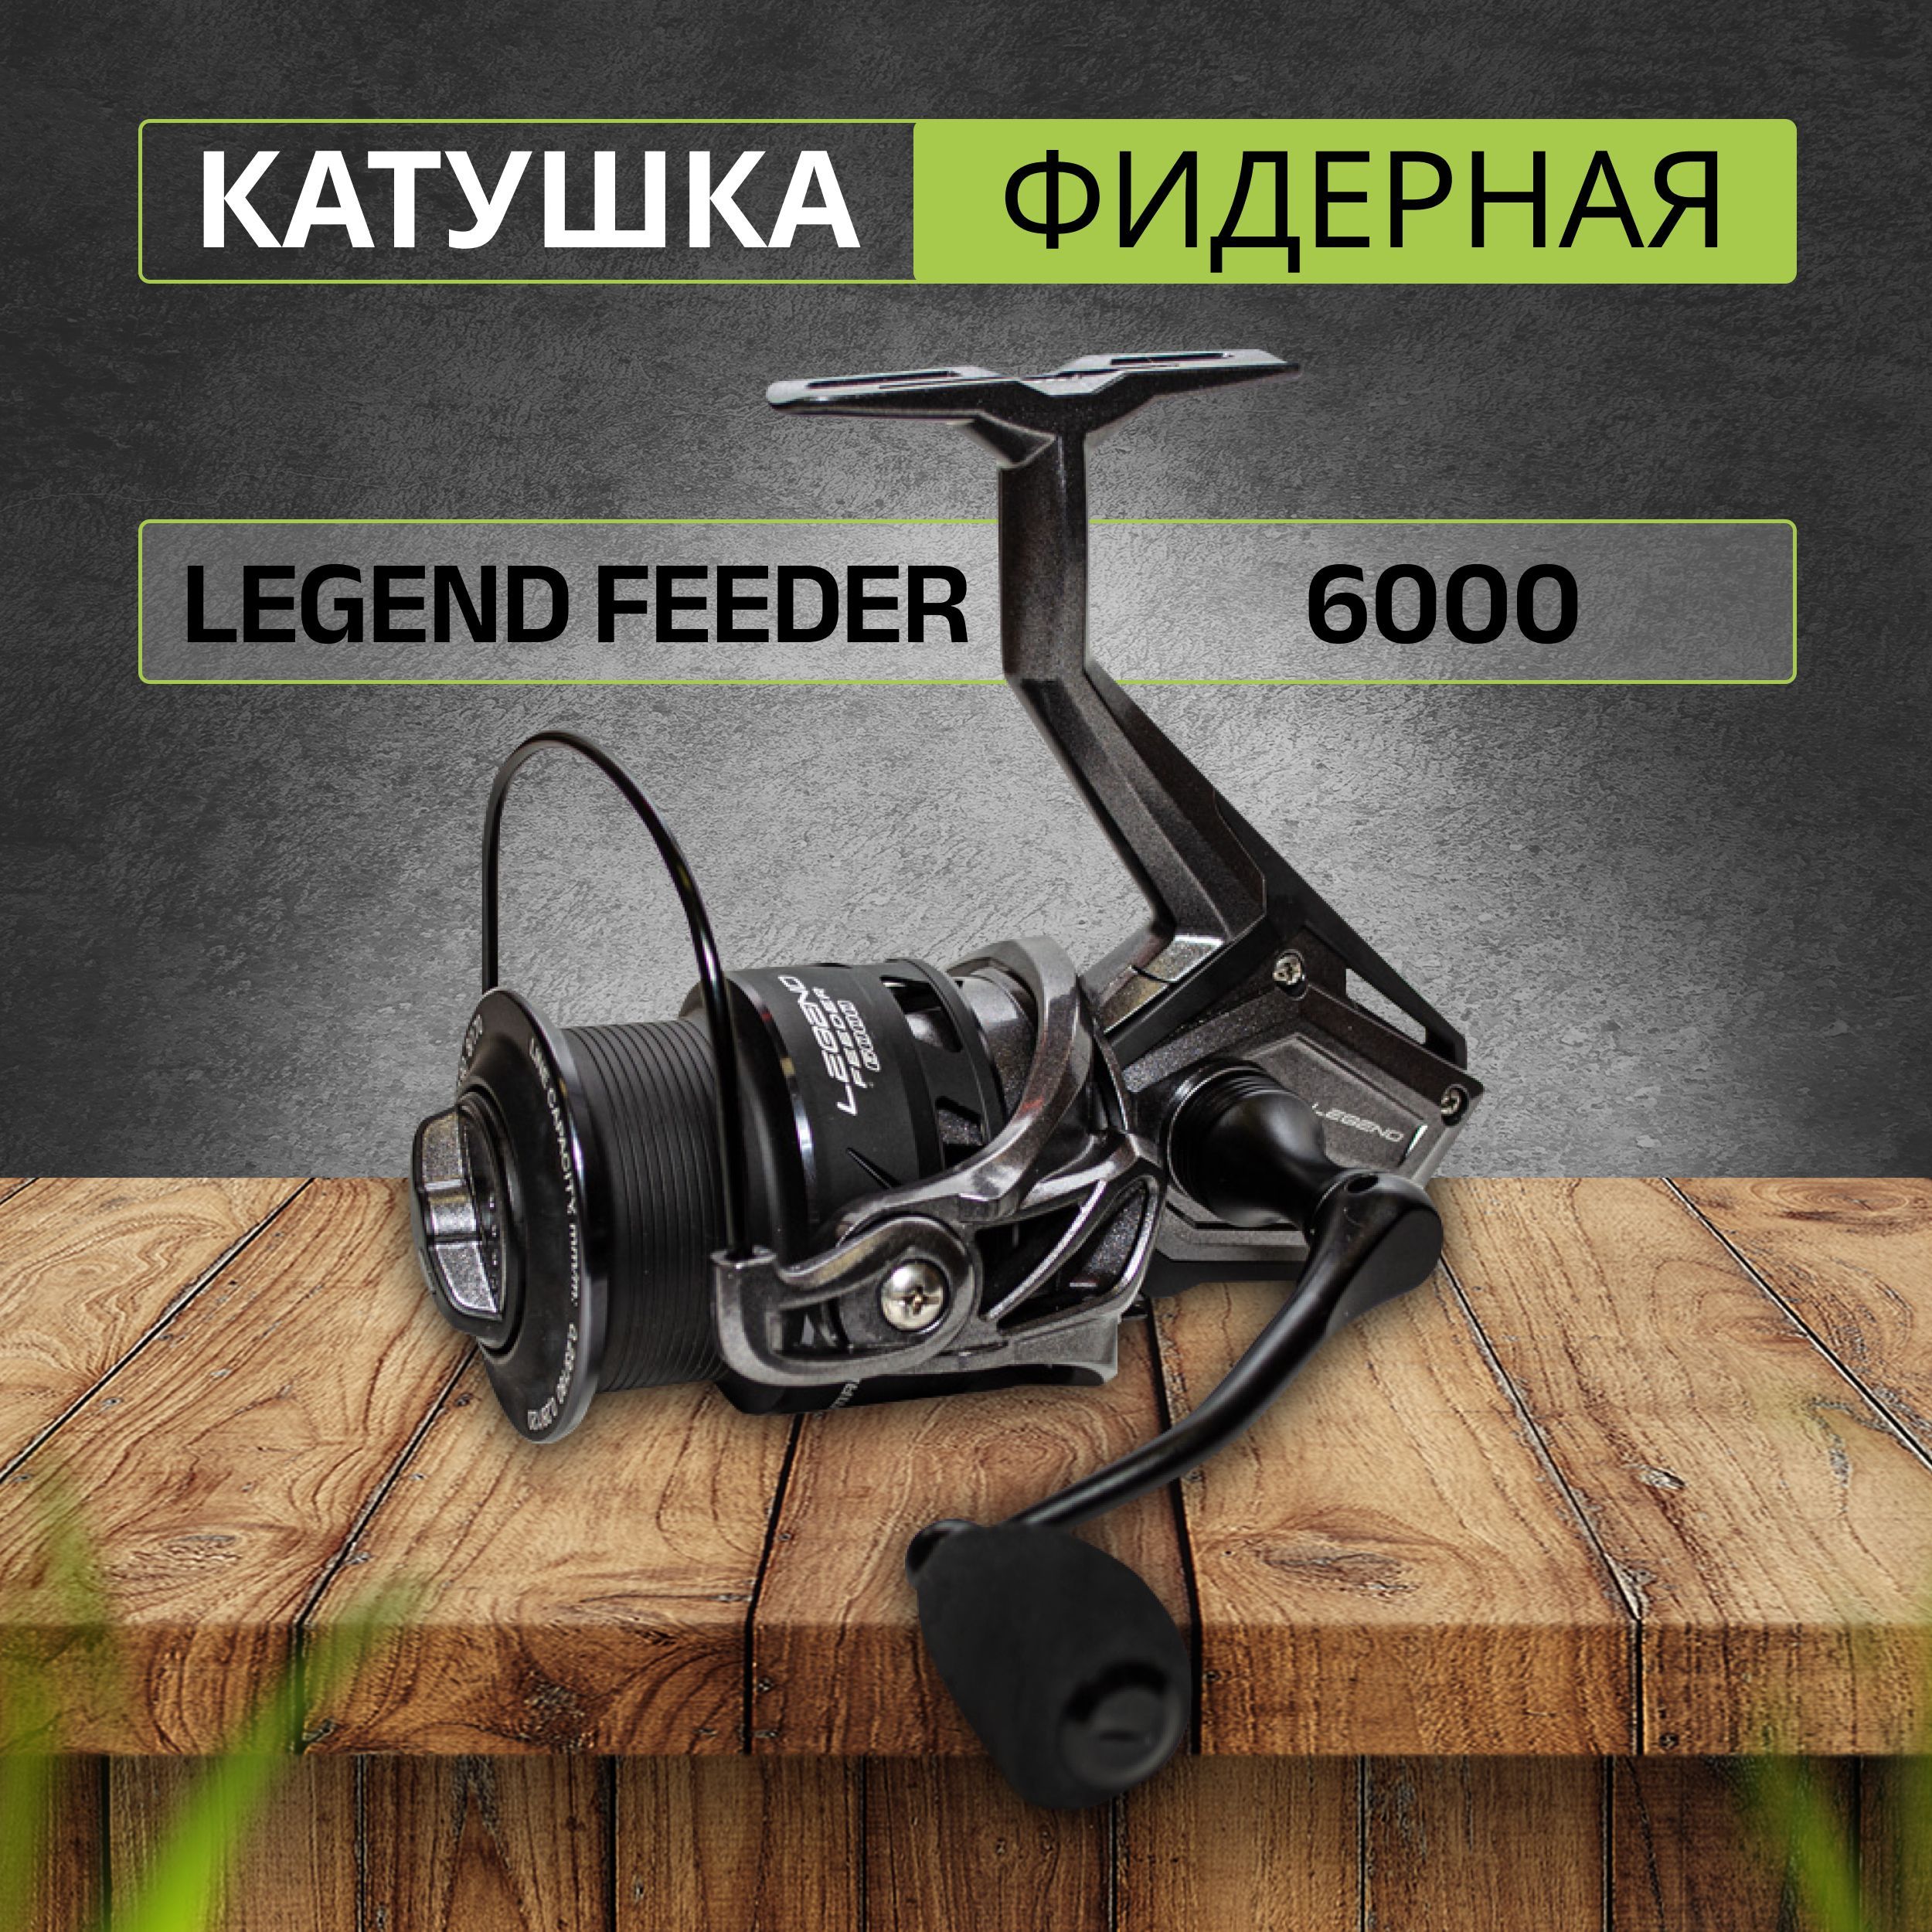 Flagman катушка фидерная legend feeder 4000 - обзор и характеристики